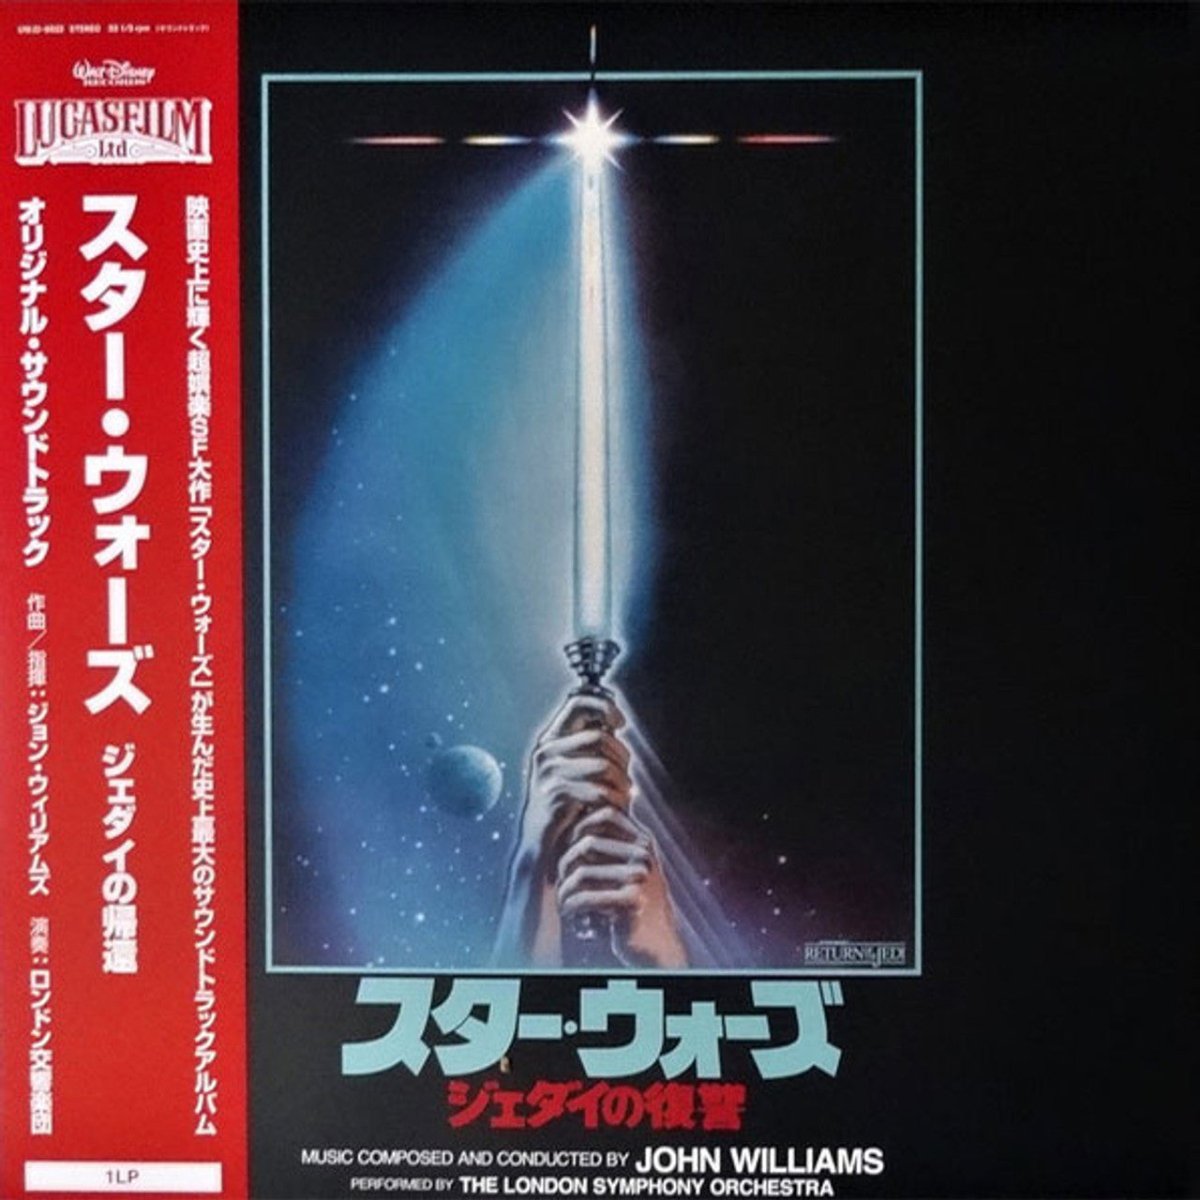 Star Wars: Return of the Jedi (Japanese Version) Import LP - John Williams - Motion Picture Soundtrack-Audio-Exchange